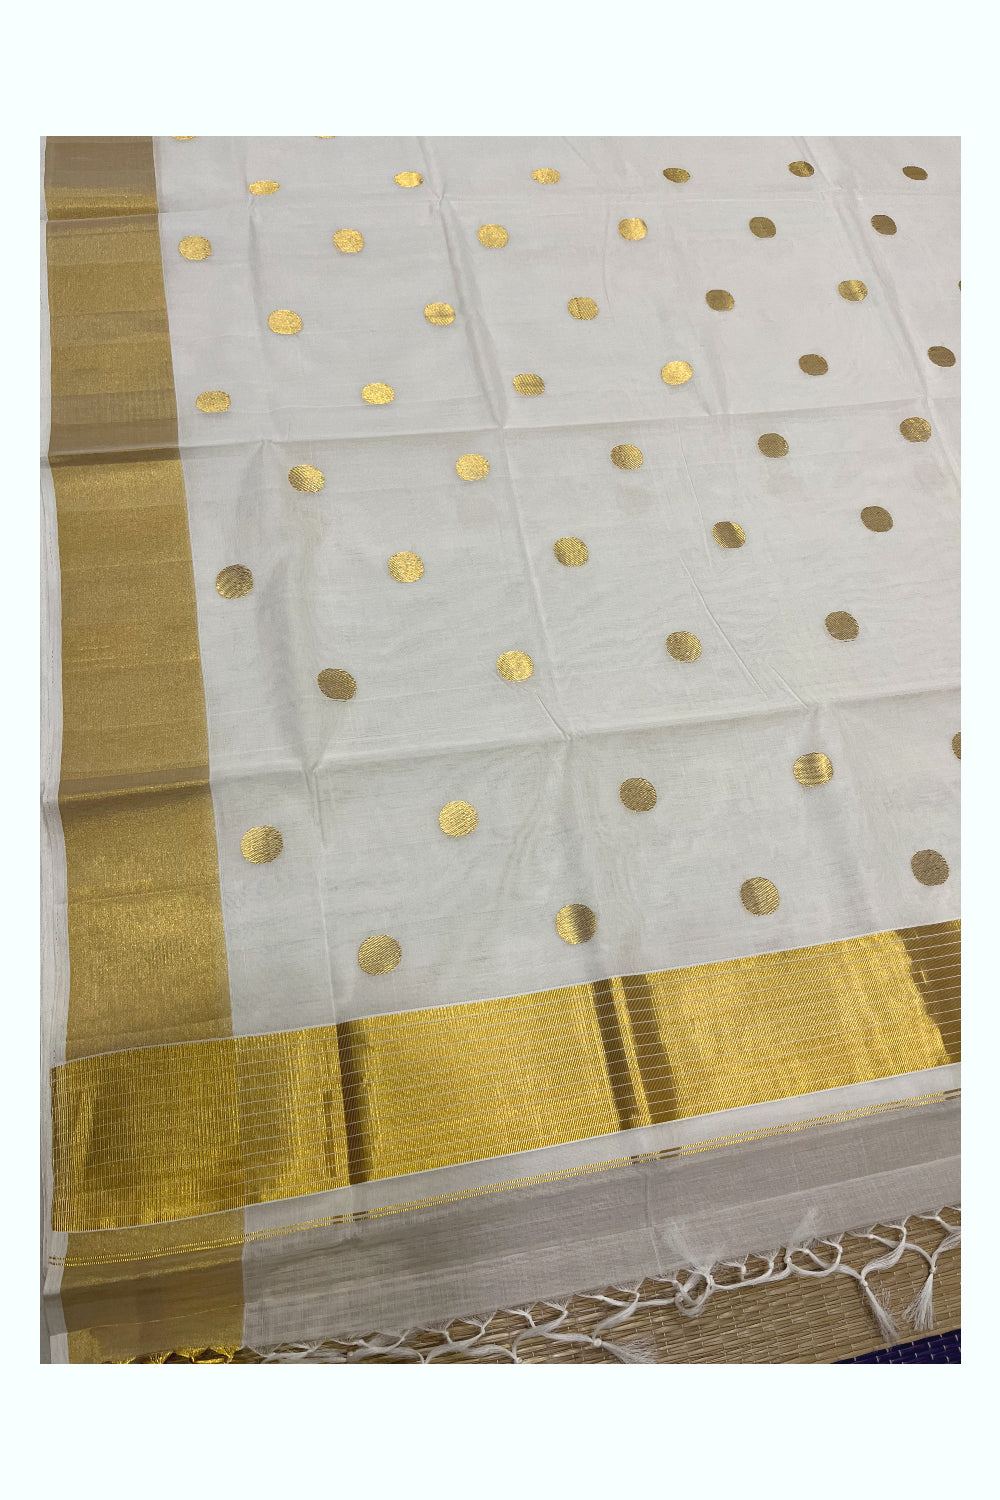 Southloom Premium Handloom Cotton Kasavu Saree with Golden Polka Woven Designs Across the Body